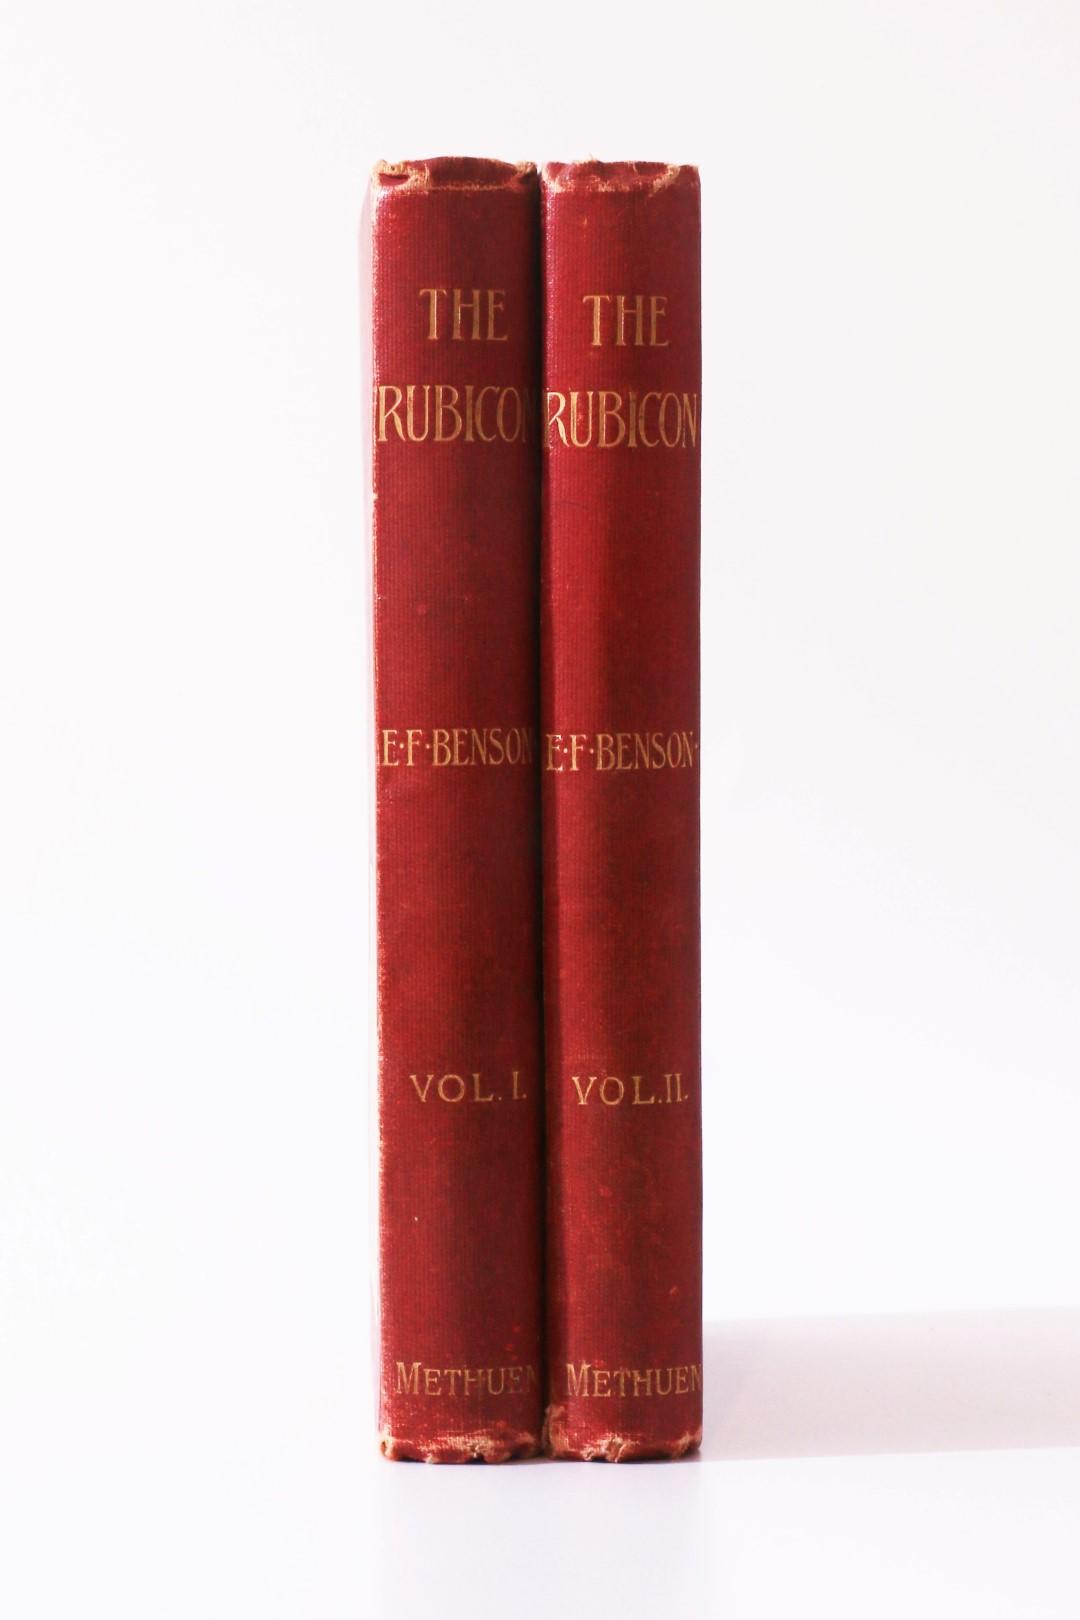 E.F. Benson - The Rubicon - Methuen, 1894, First Edition.